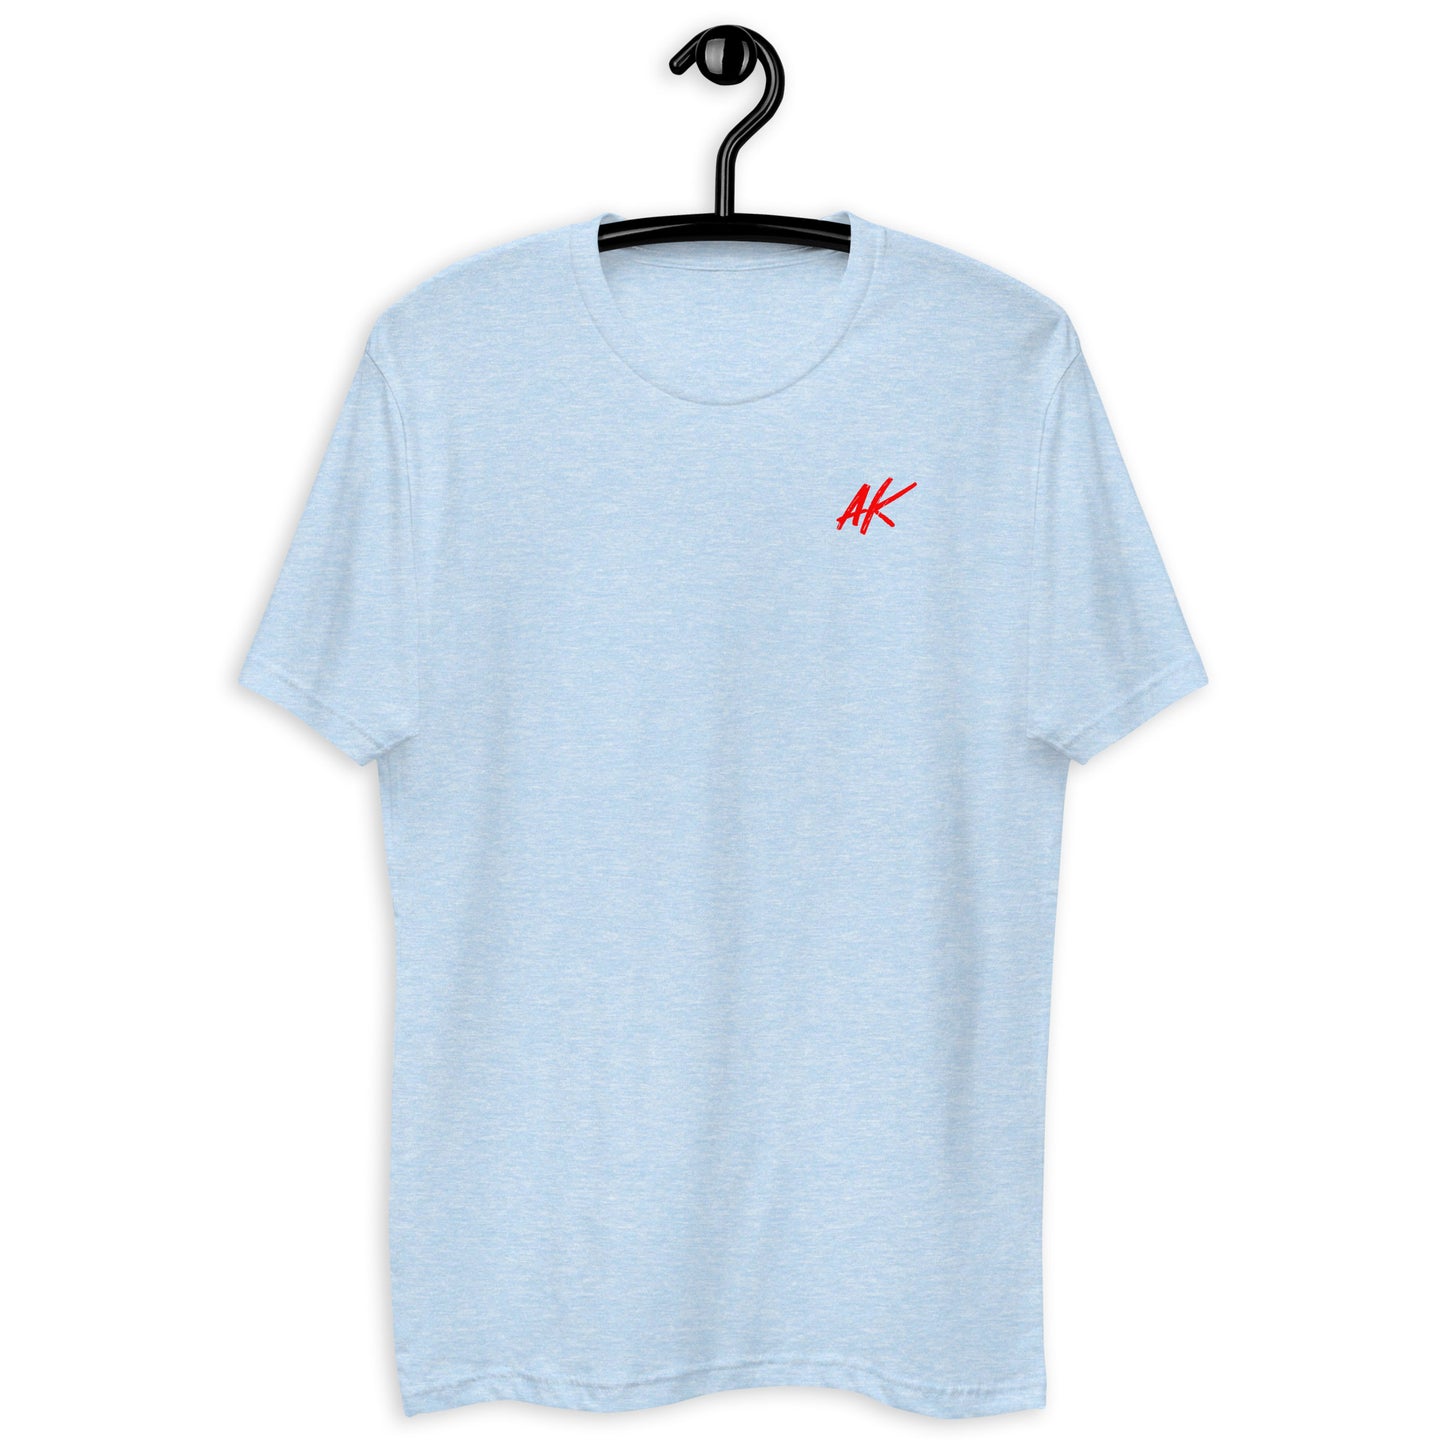 M| AK 3x T-shirt - red